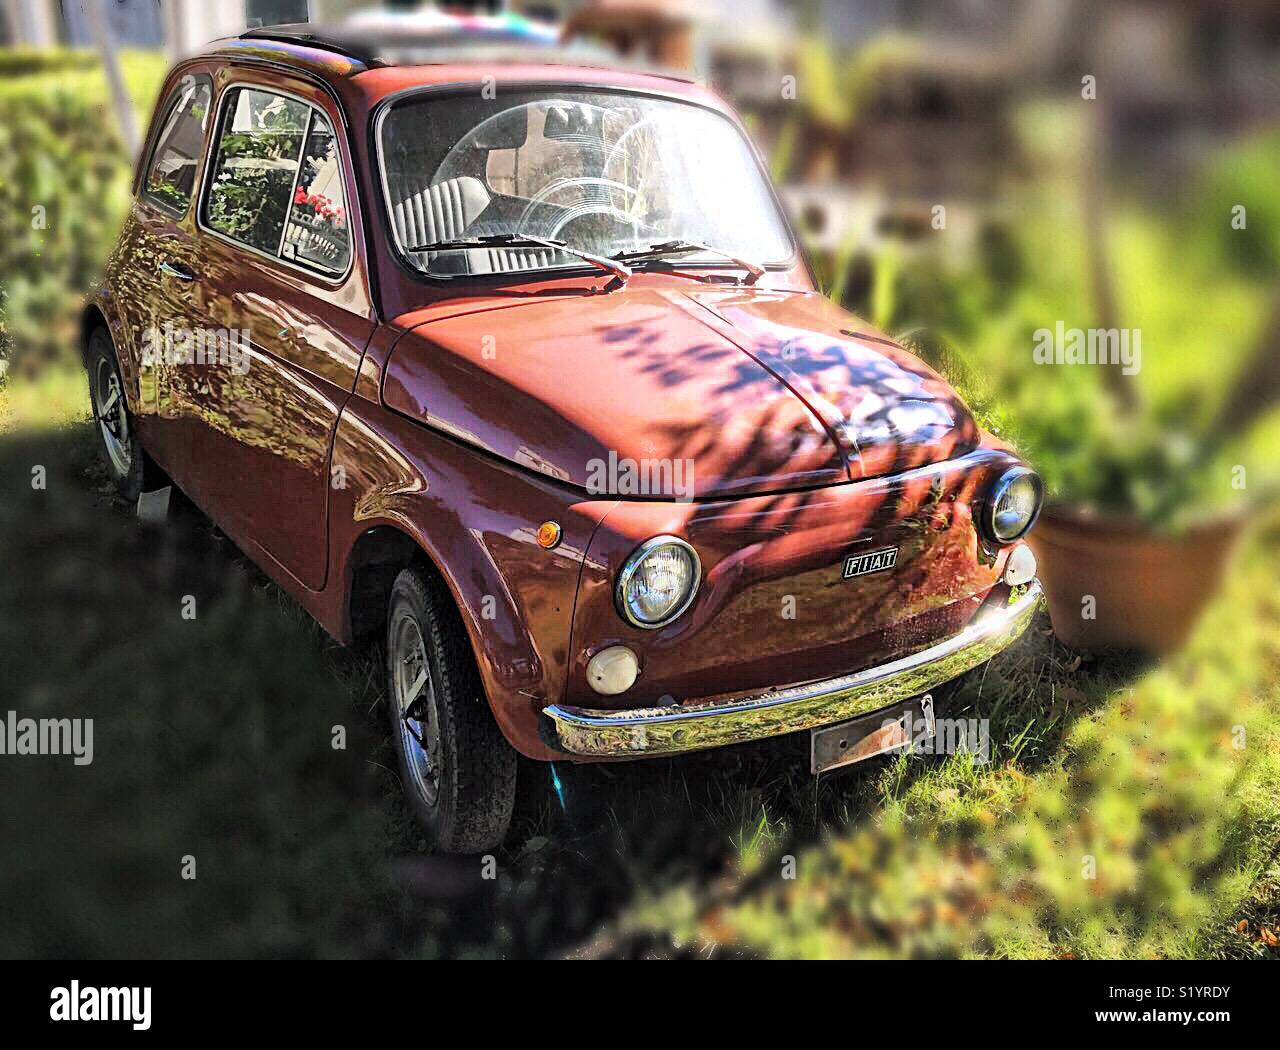 Fiat 500, Bimbi, is still alive ...! Stock Photo